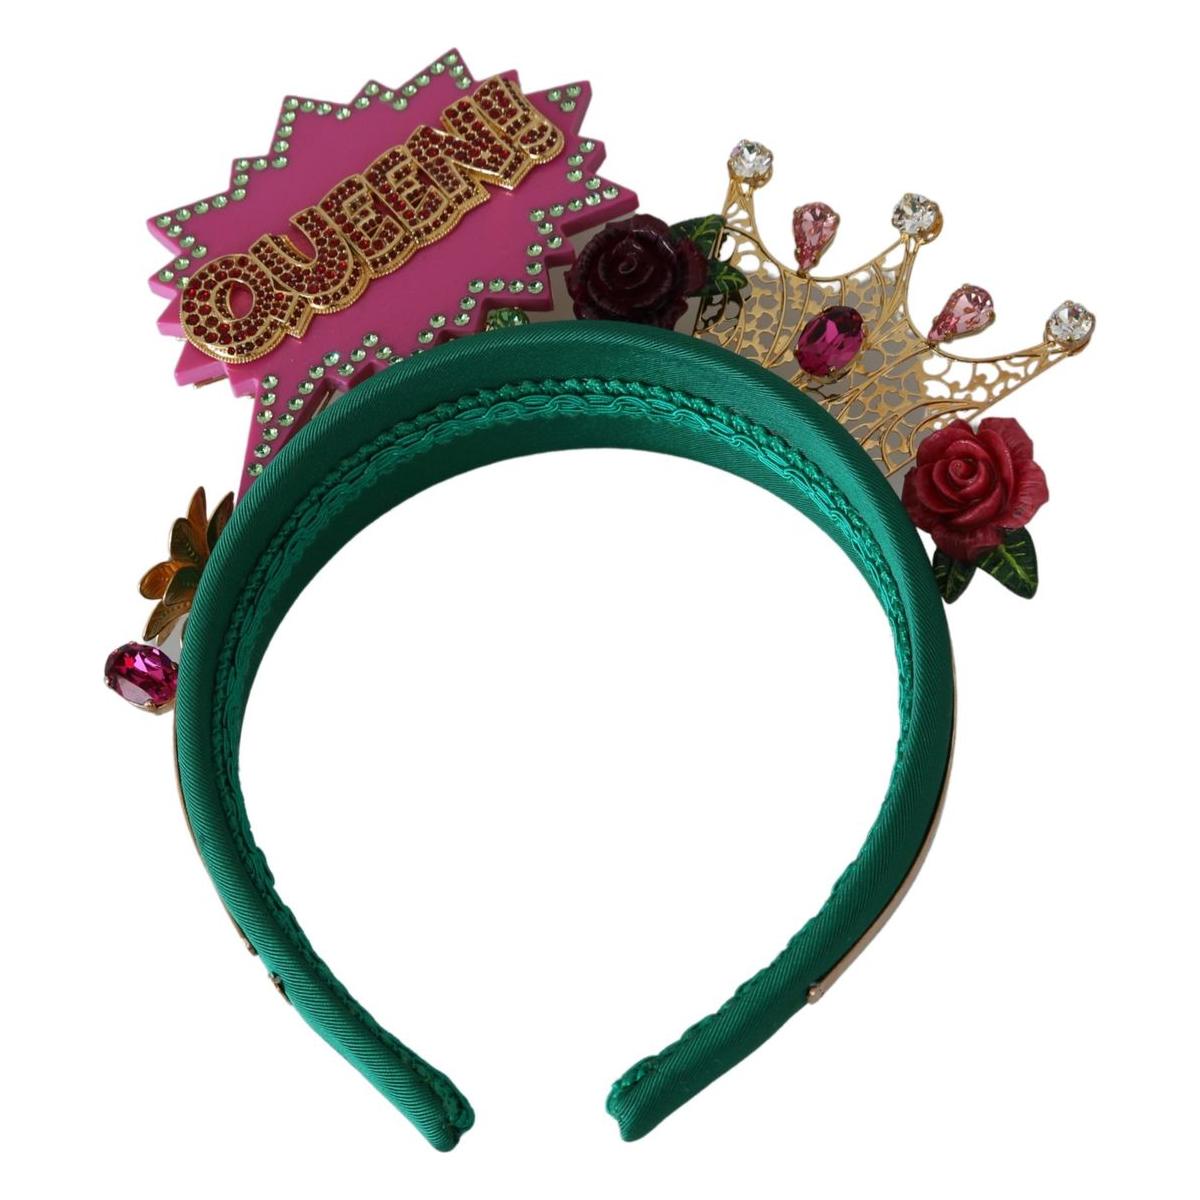 Dolce & Gabbana Stunning Silk & Brass Diadem Headband green-pink-crystal-fumetti-cartoons-diadem-headband Diadem IMG_9149-scaled-f8ba7413-c82_742d5491-0a8c-4a7f-bd8c-b28e9cee623d.jpg